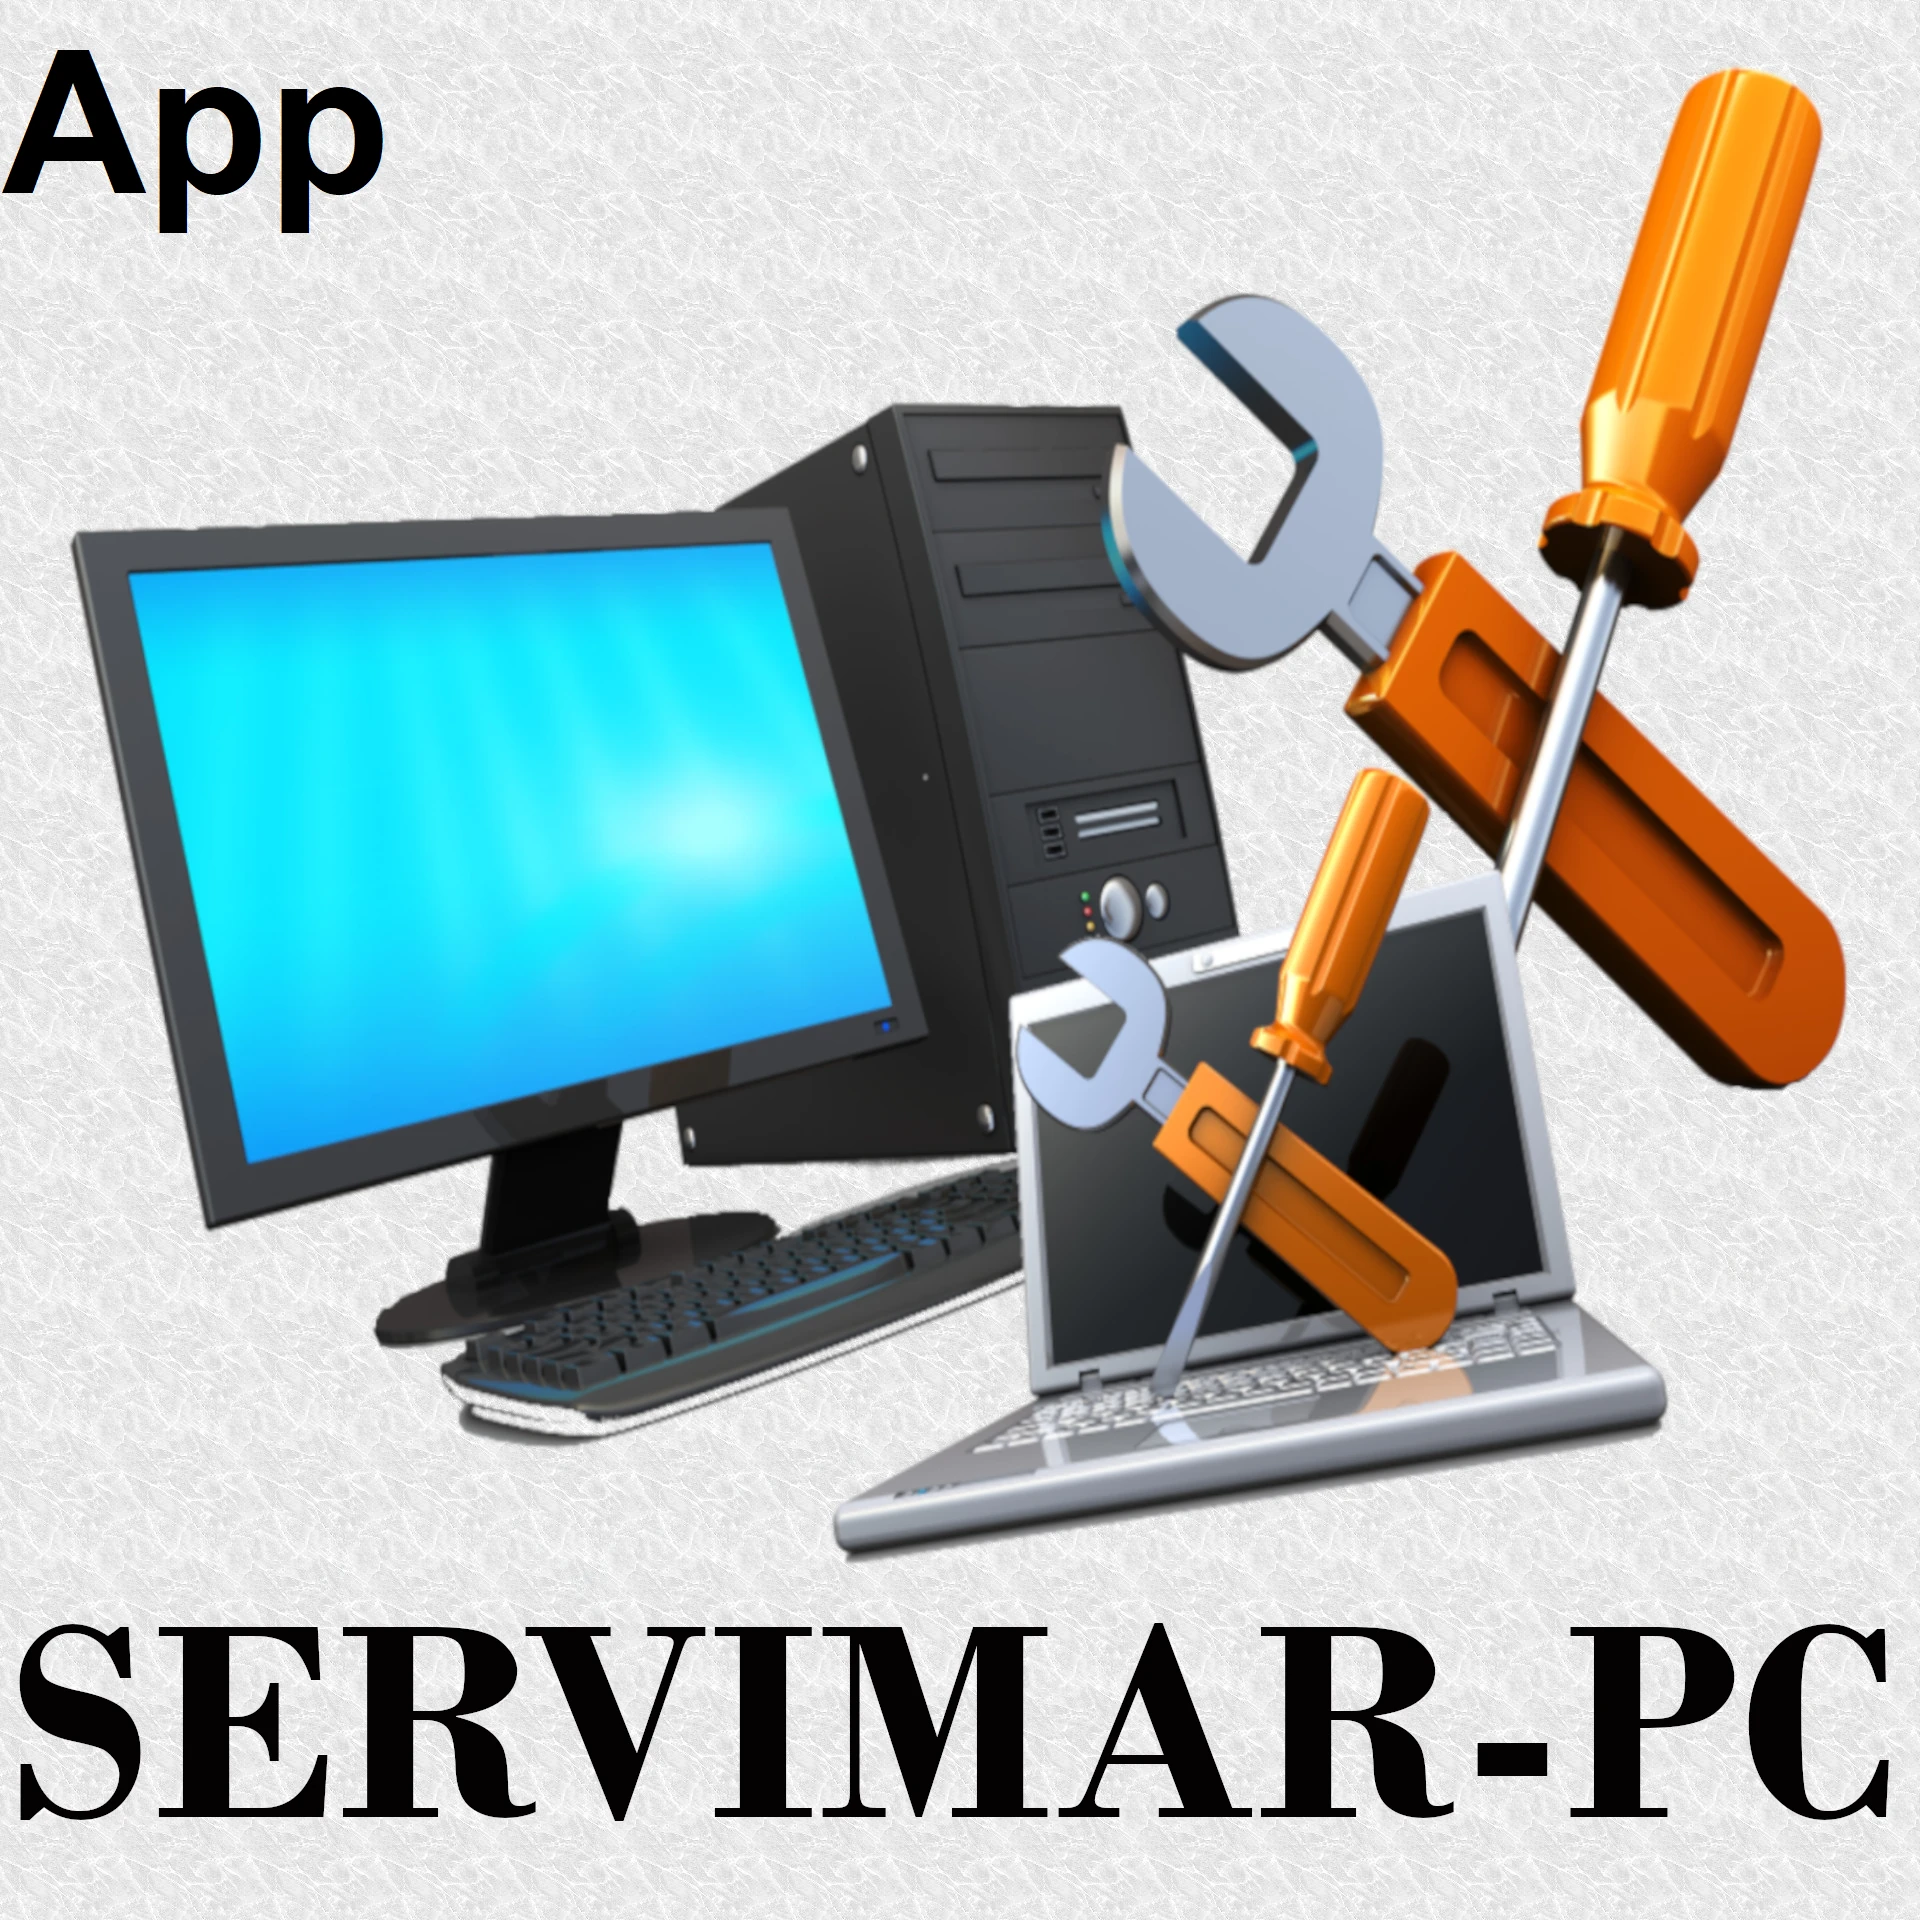 SERVIMAR-PC Logo App